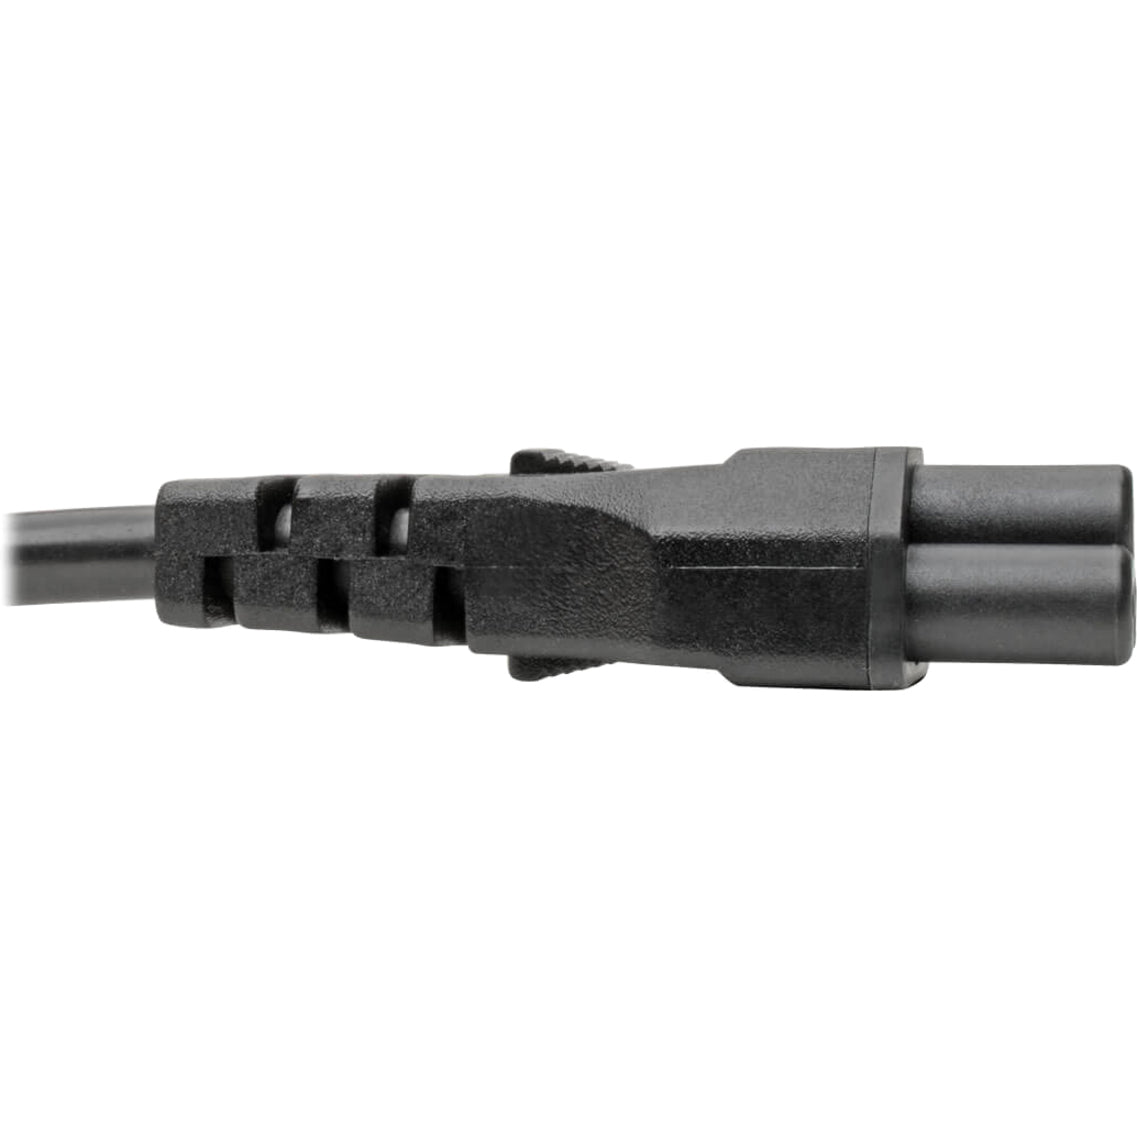 Tripp Lite P060-006 Standard Power Cord, 6ft Heavy Duty, C5 to BS-1363 UK Plug